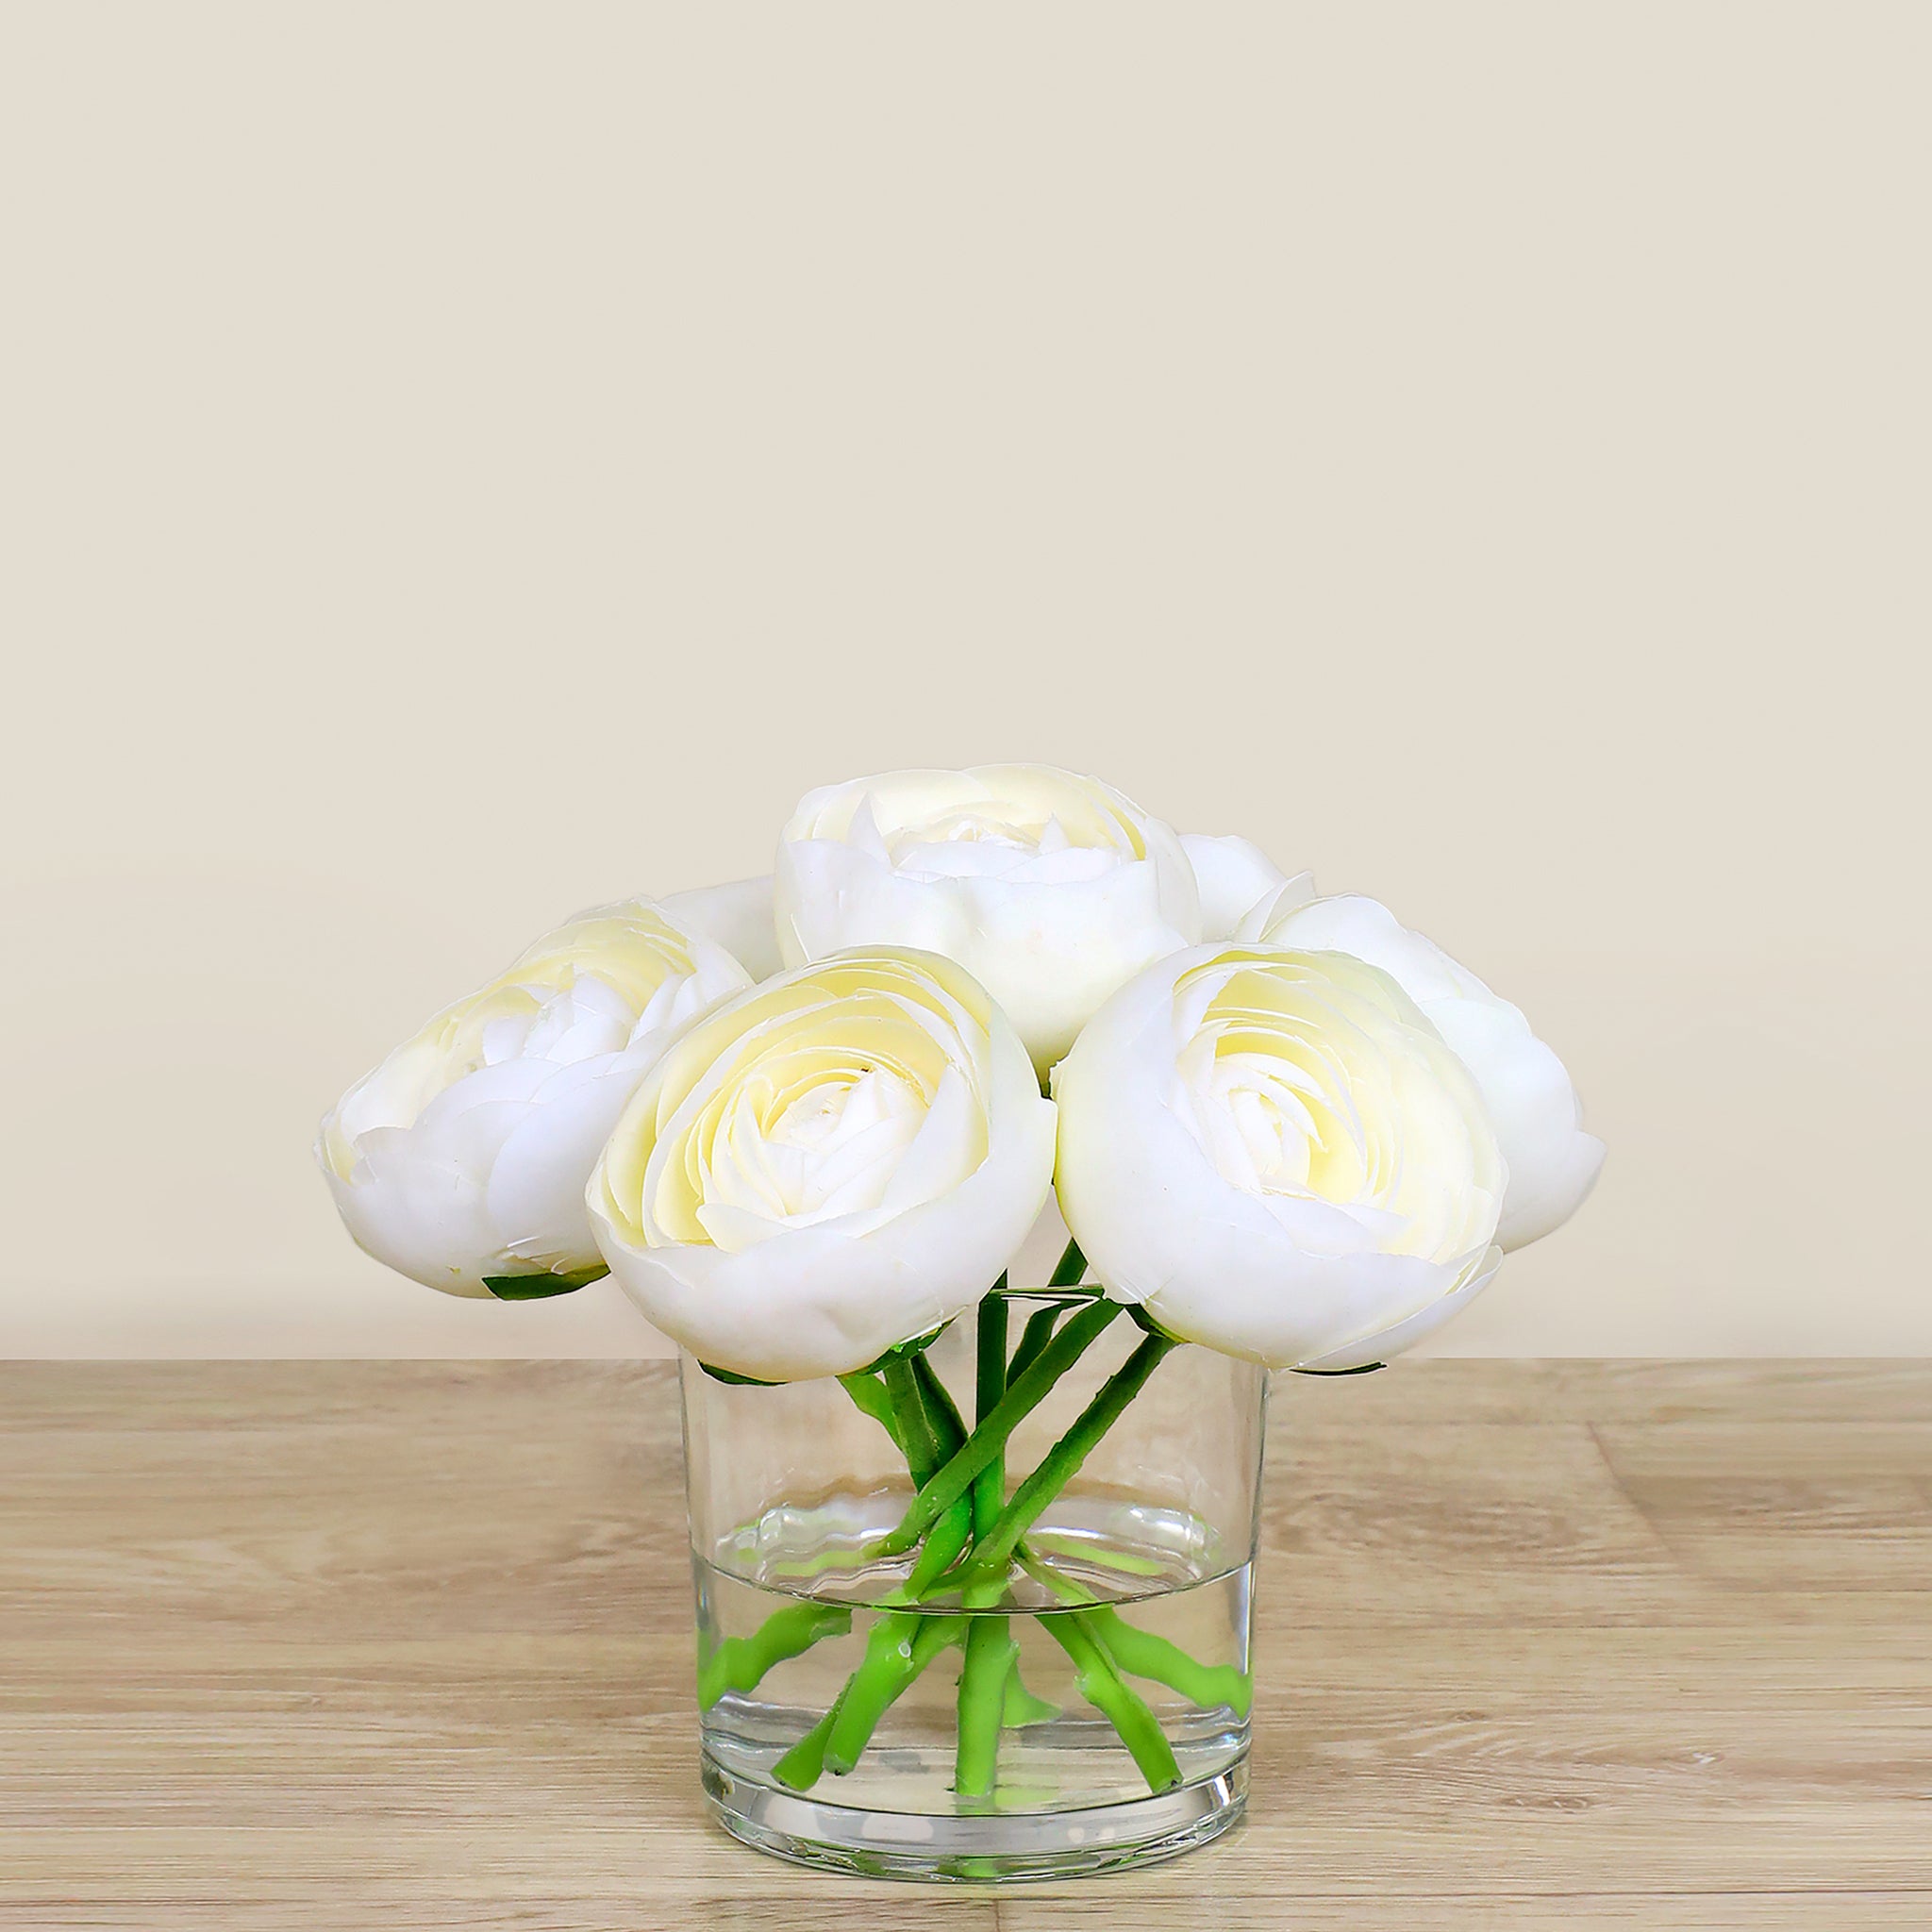 Artificial Ranunculus Arrangement in Glass Vase